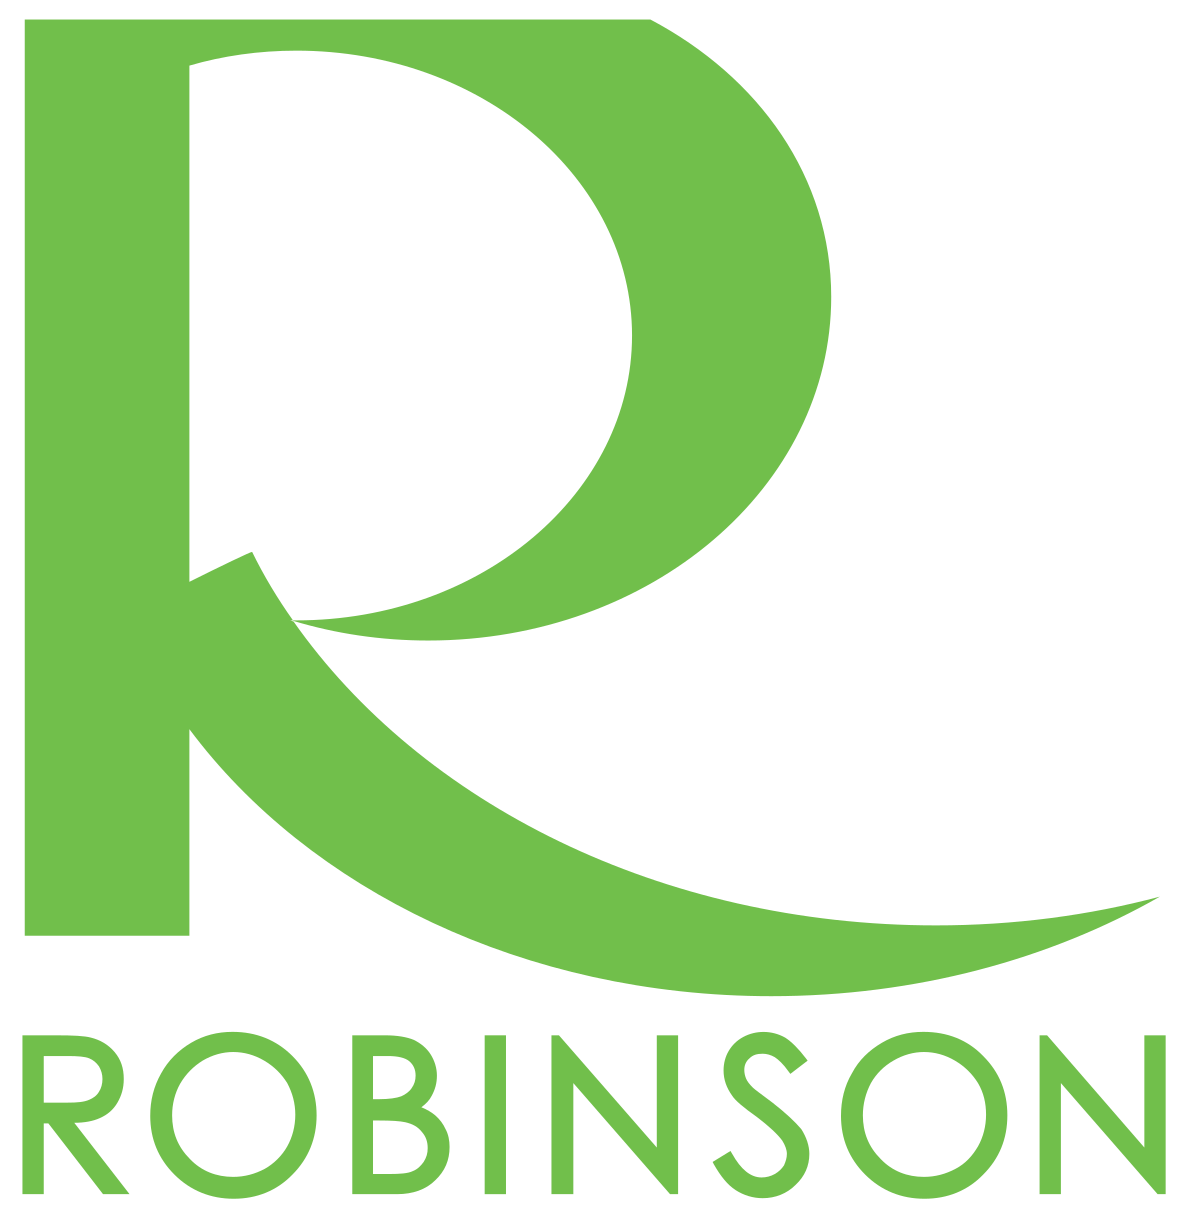 Robinsons Logo - Robinson Department Store